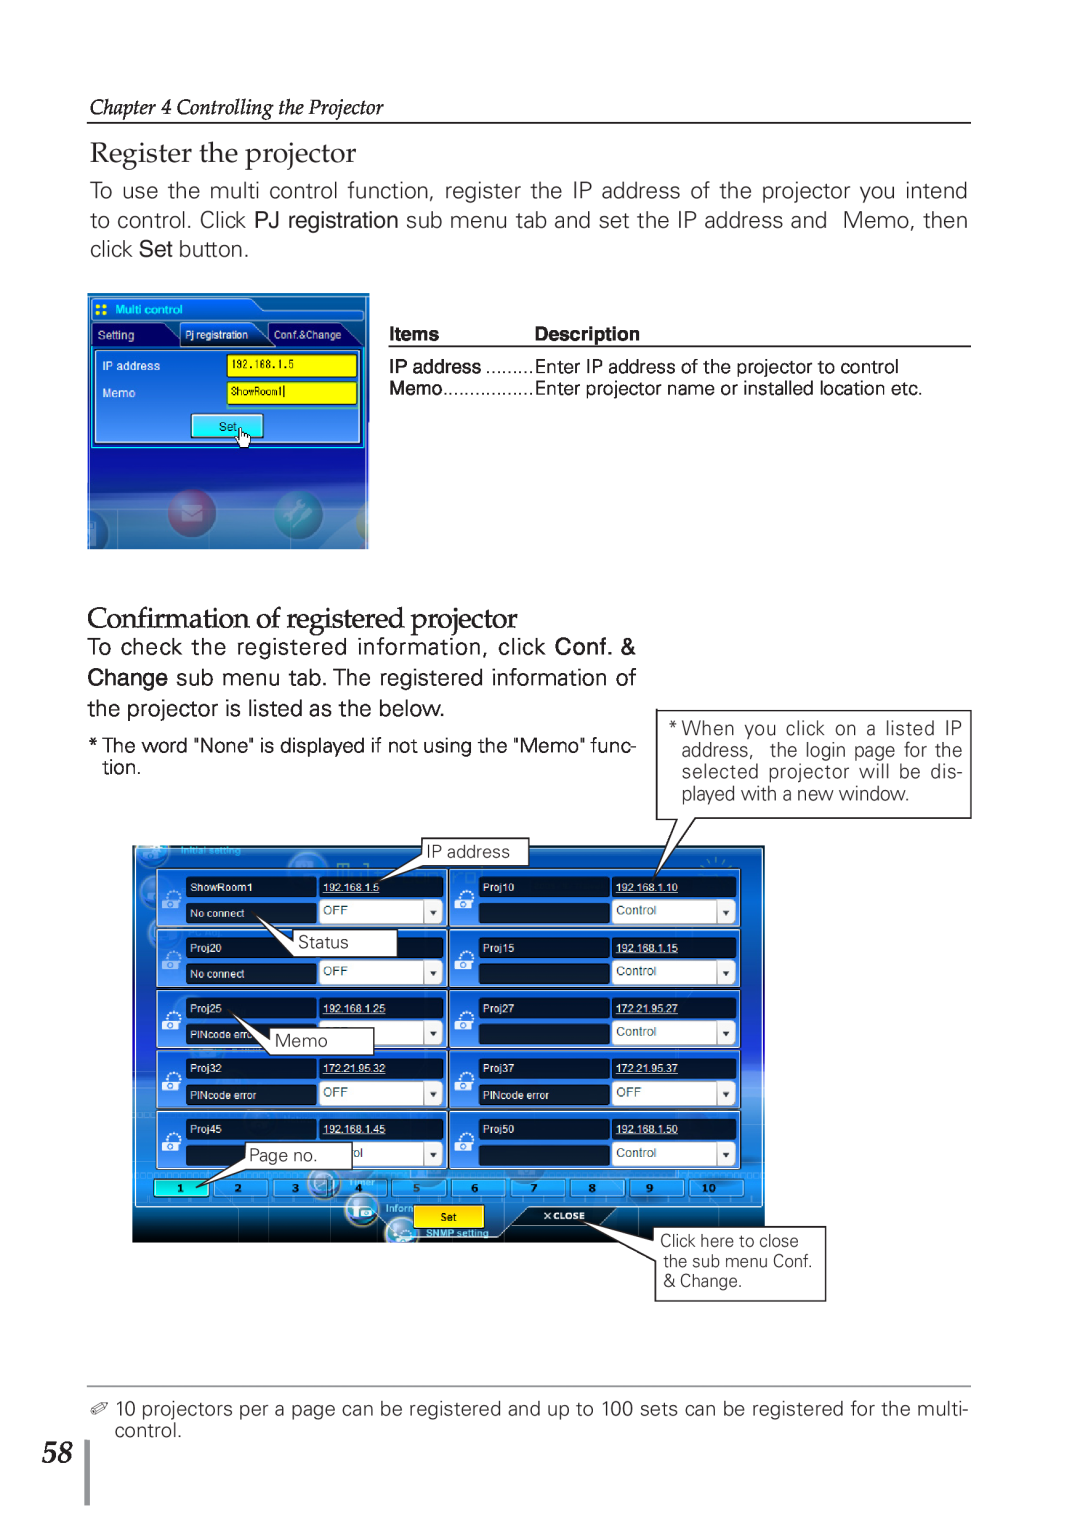 Eiki PJNET-300 owner manual Register the projector, Confirmation of registered projector 